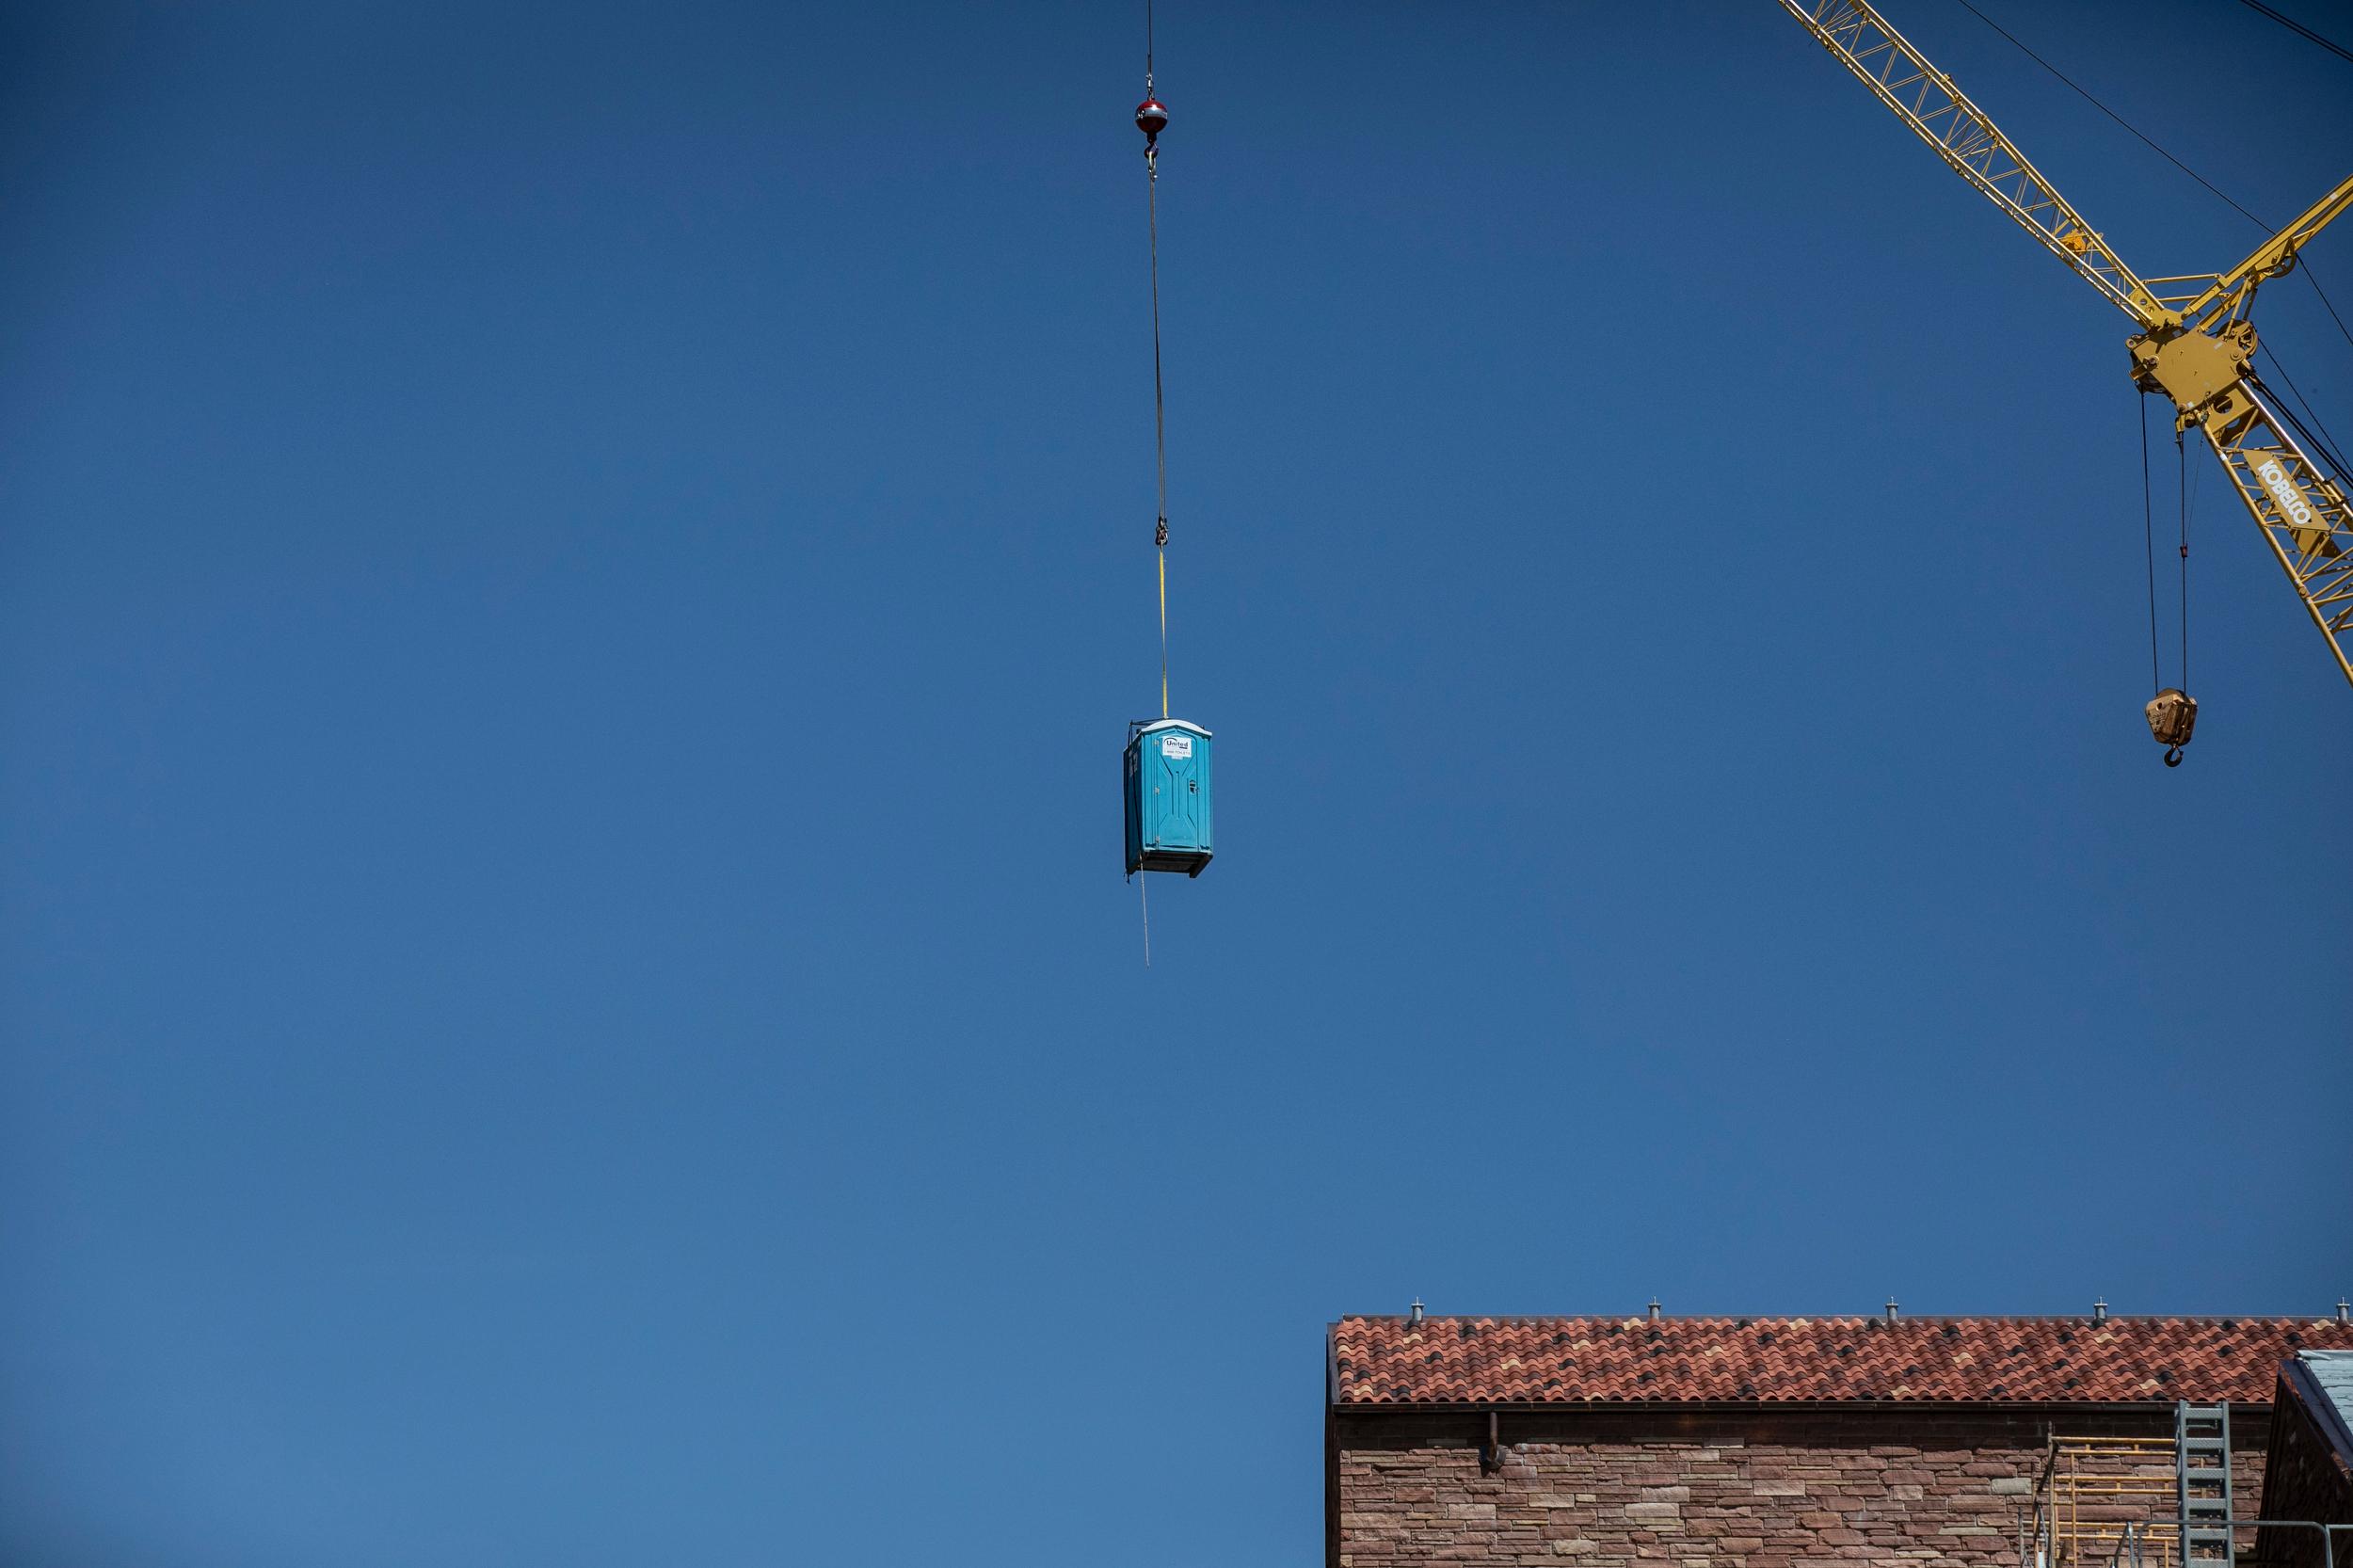 Crane lifts a portable toilet over a construction site at the University go Colorado at Boulder